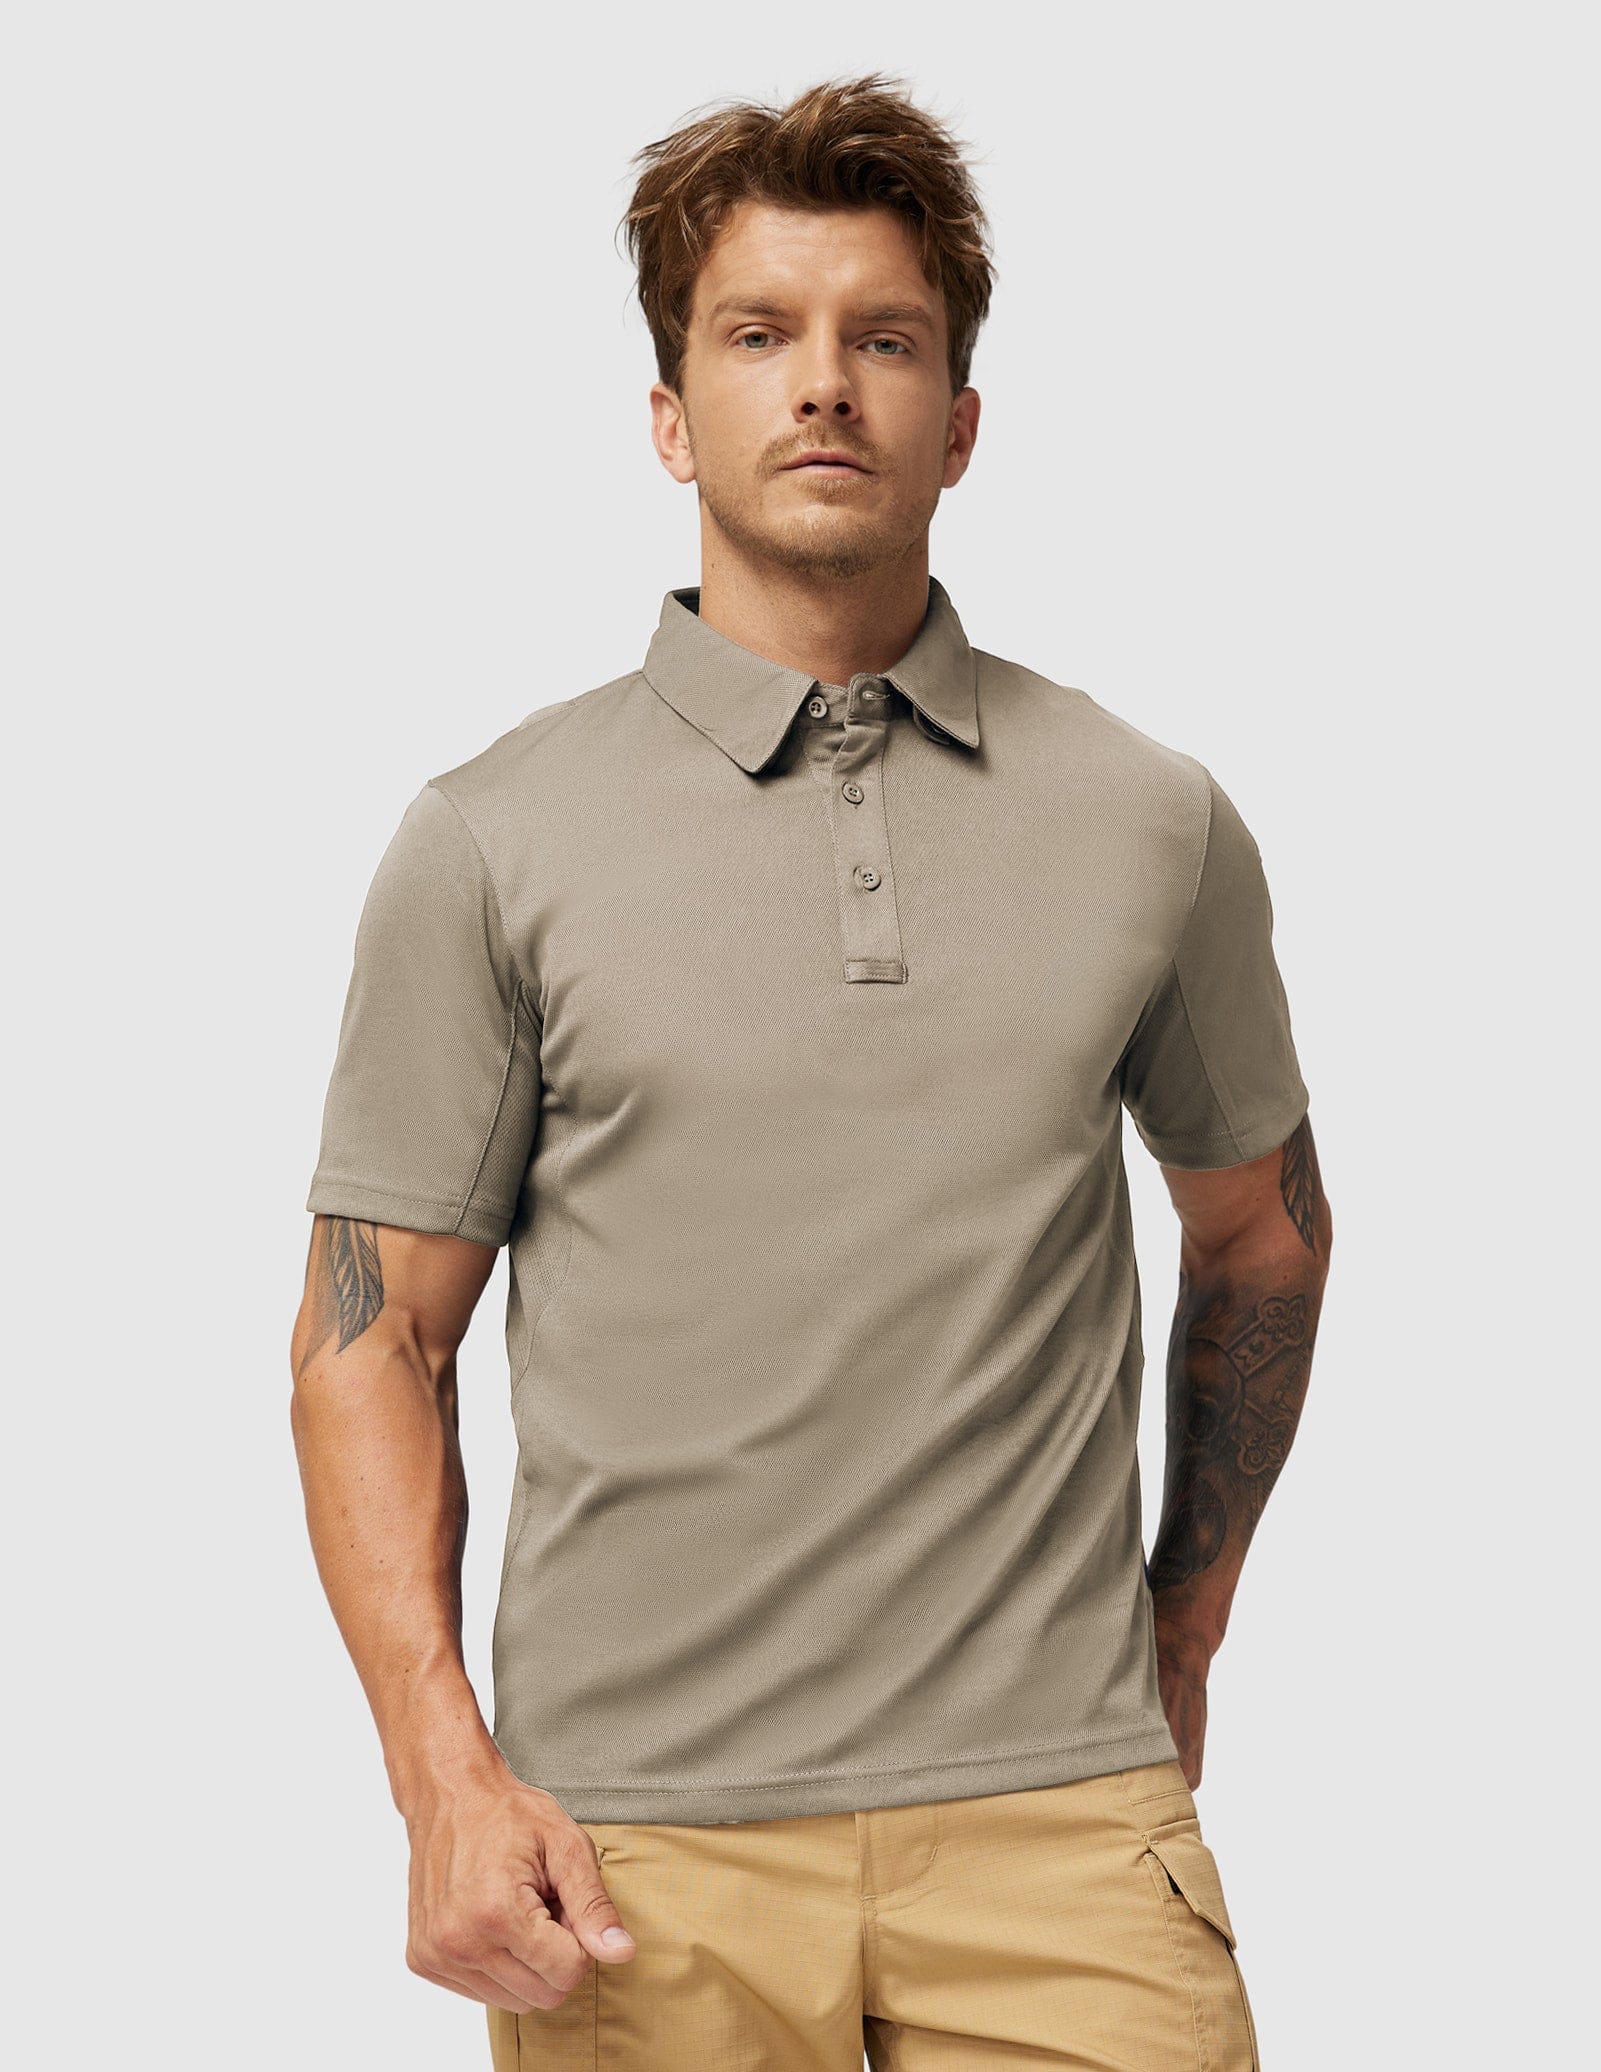 MIER Men's Tactical Polo Shirts Outdoor Collared Shirt